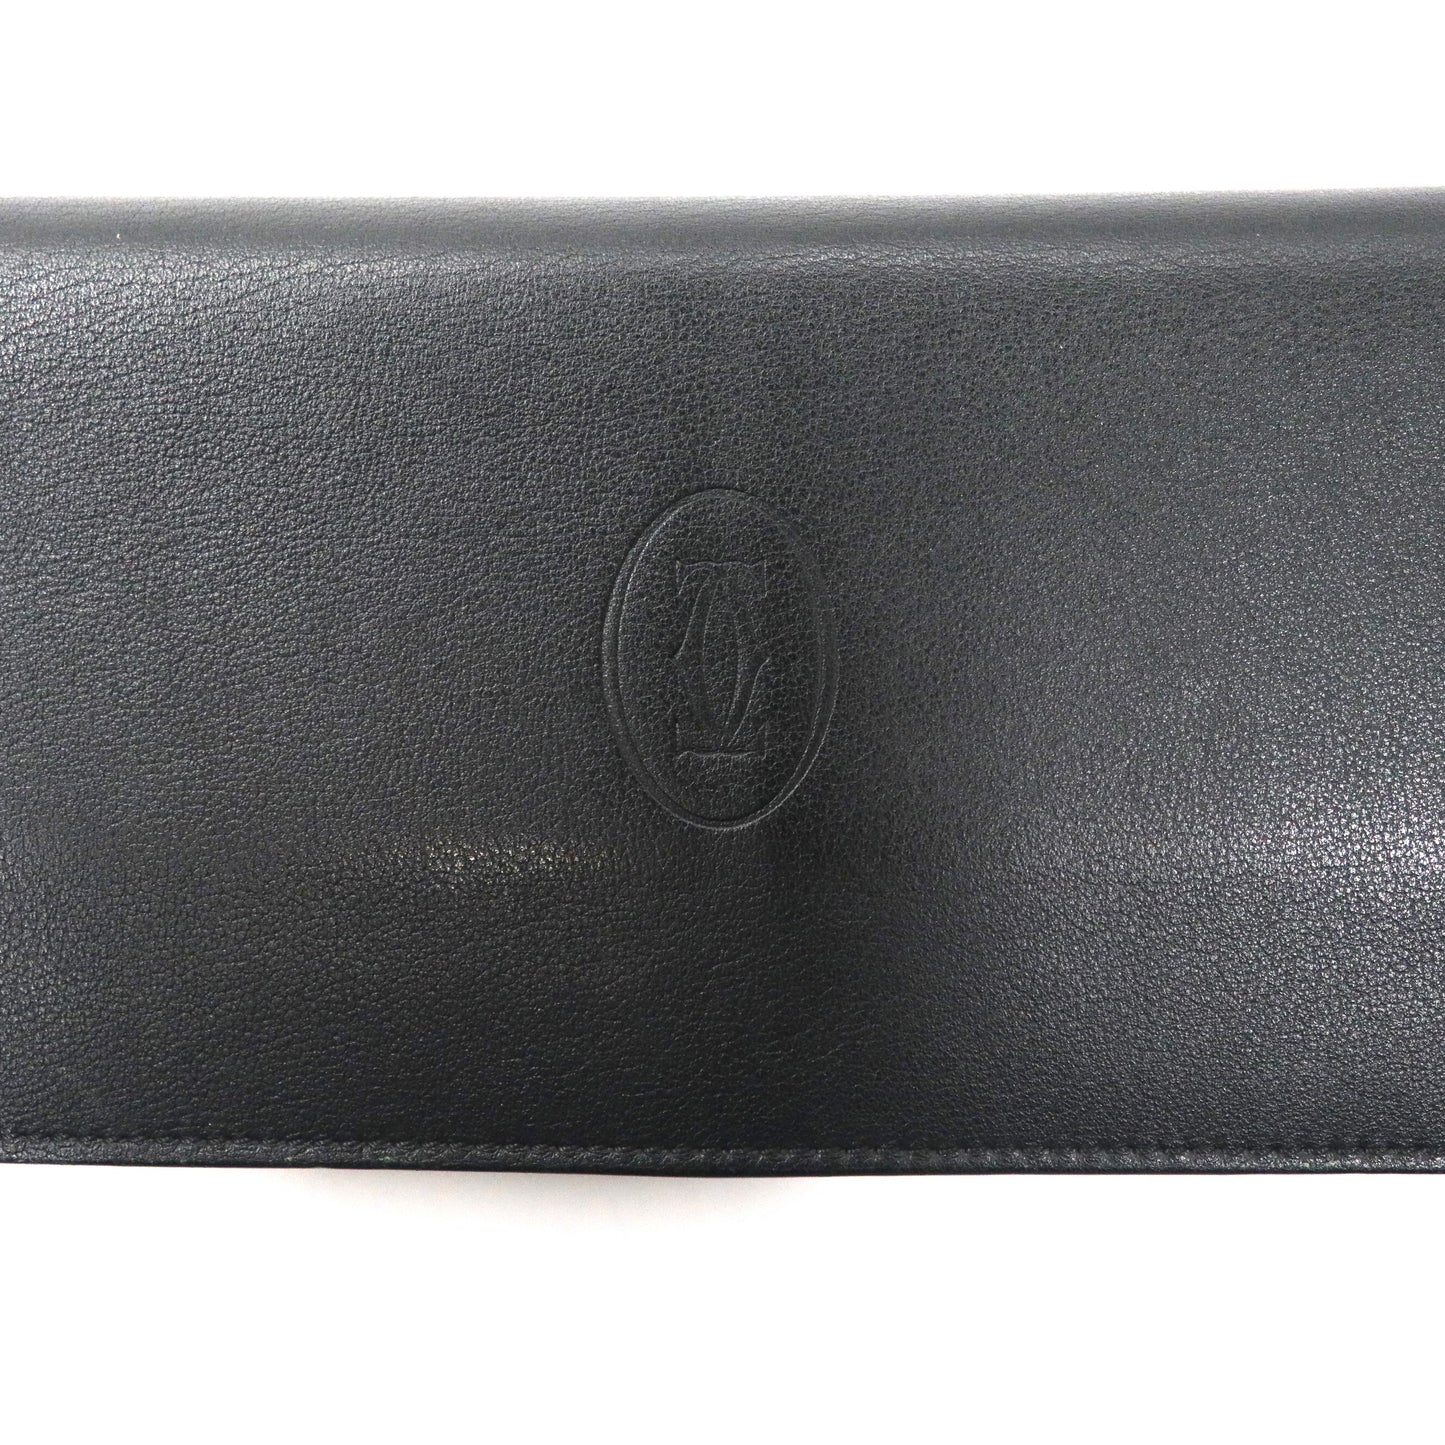 Cartier 長財布 ブラック レザー ZIPPED International WALLET L3001363 フランス製 未使用品